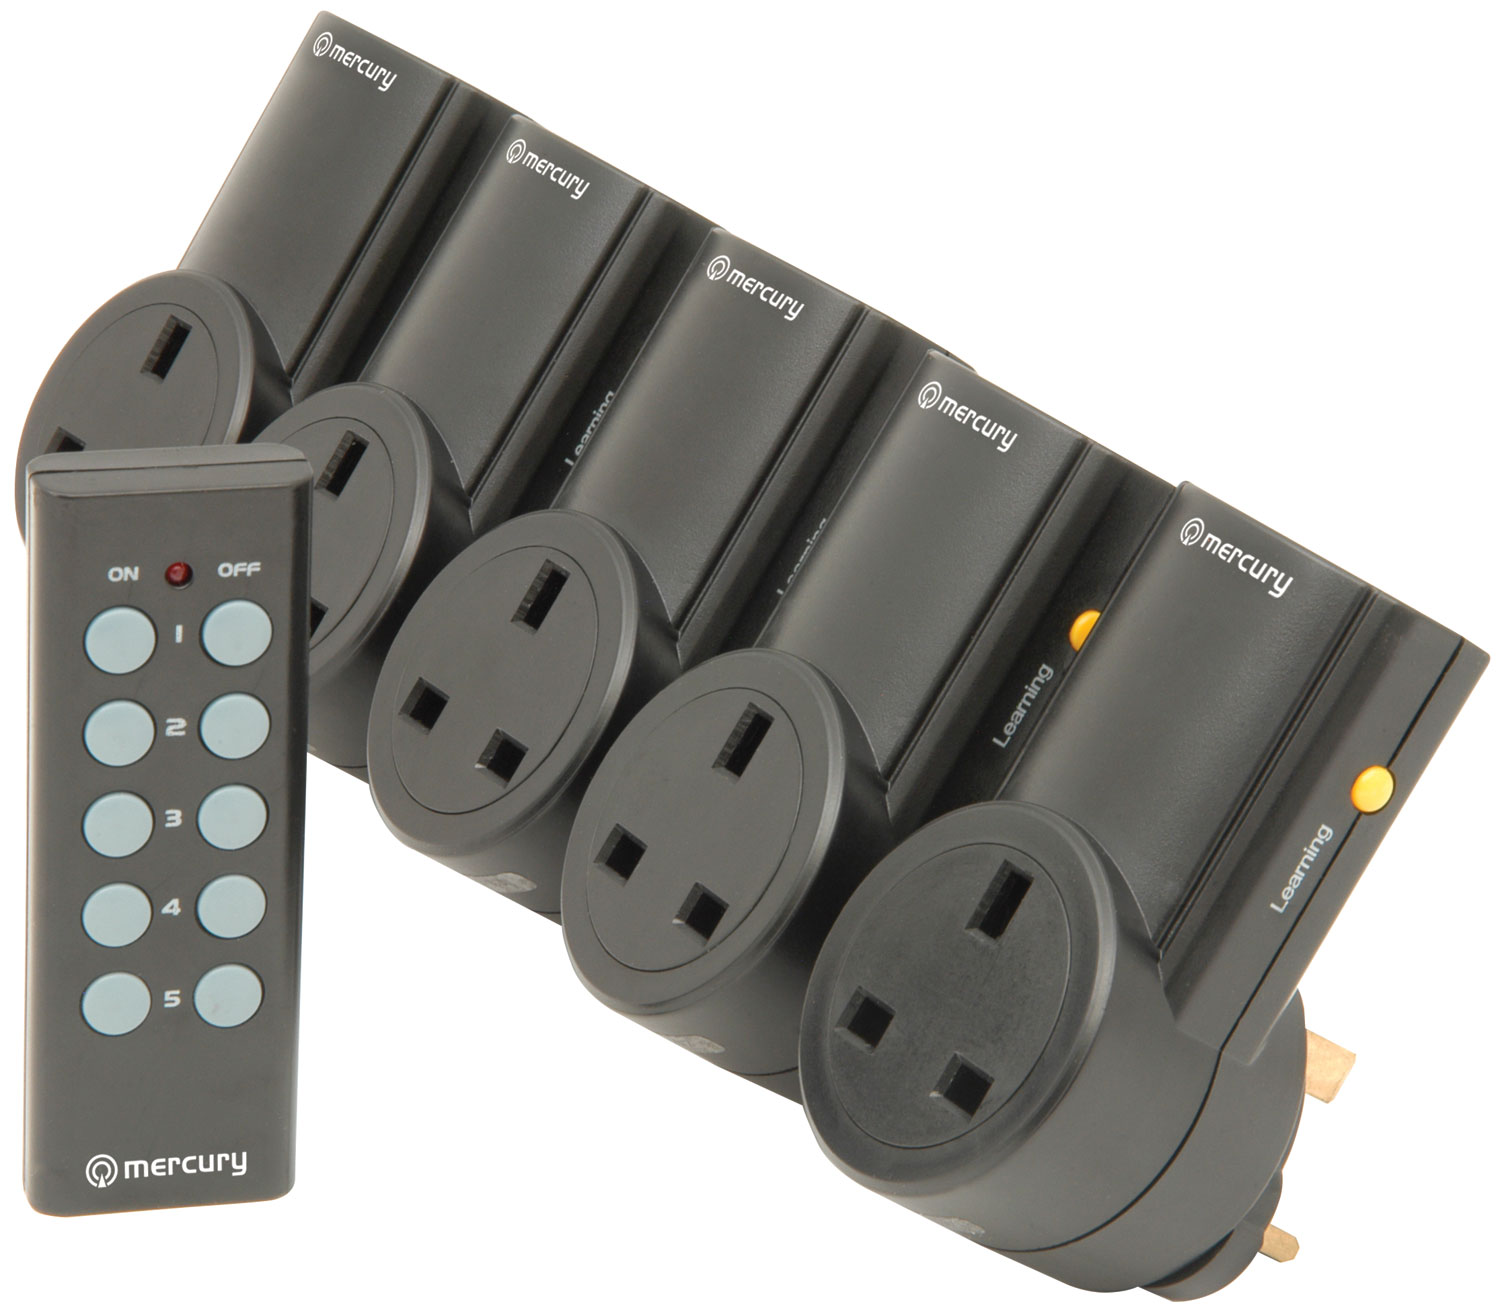 Mercury 429.951 Remote Control Mains Plug Standby Saver TV Control Infra Red New